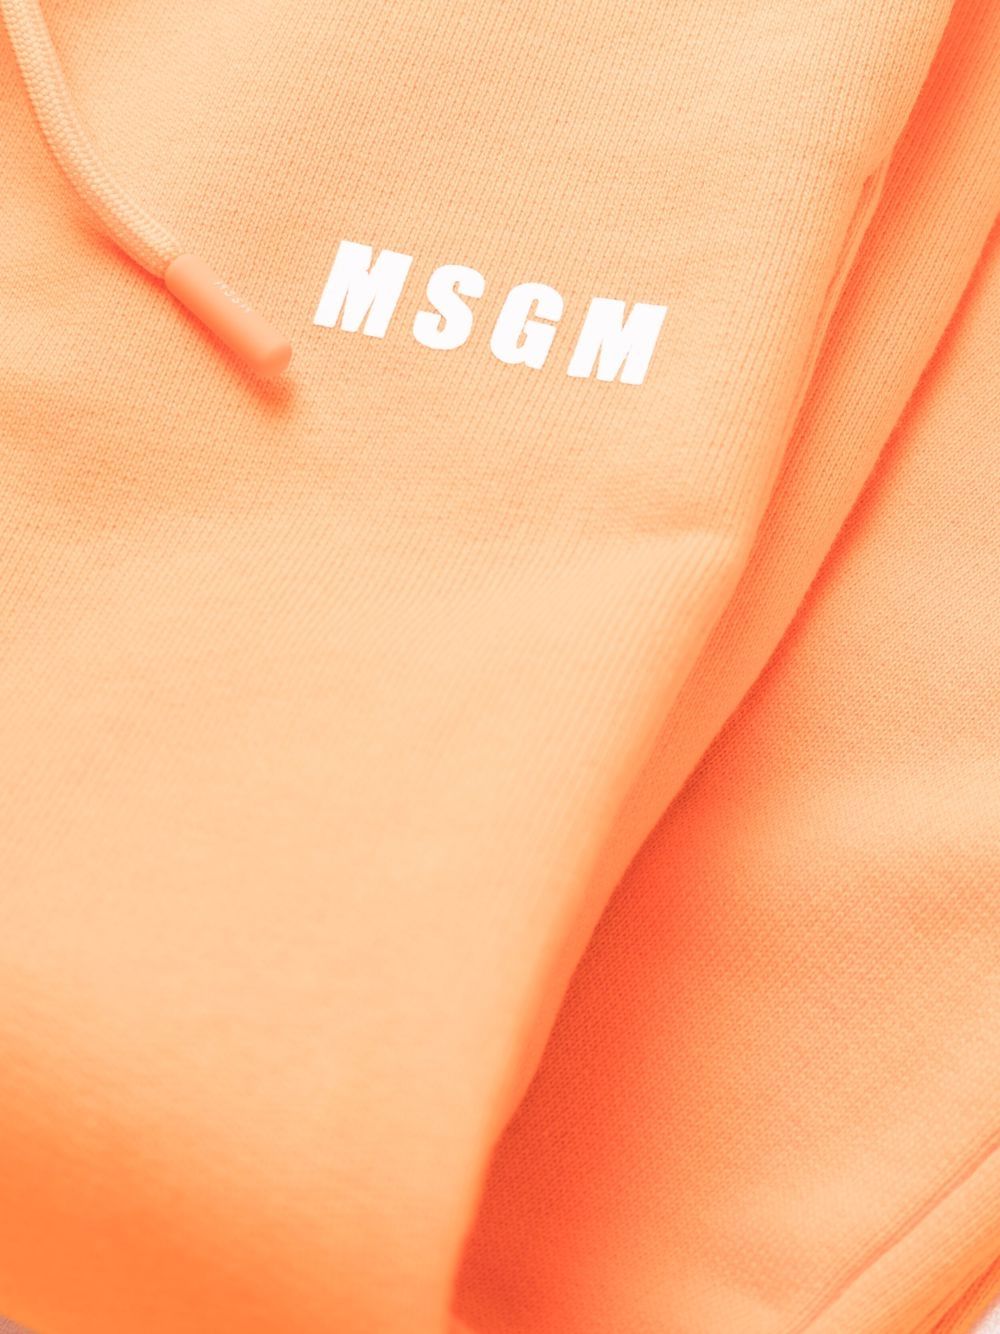 orange logo-print track pants